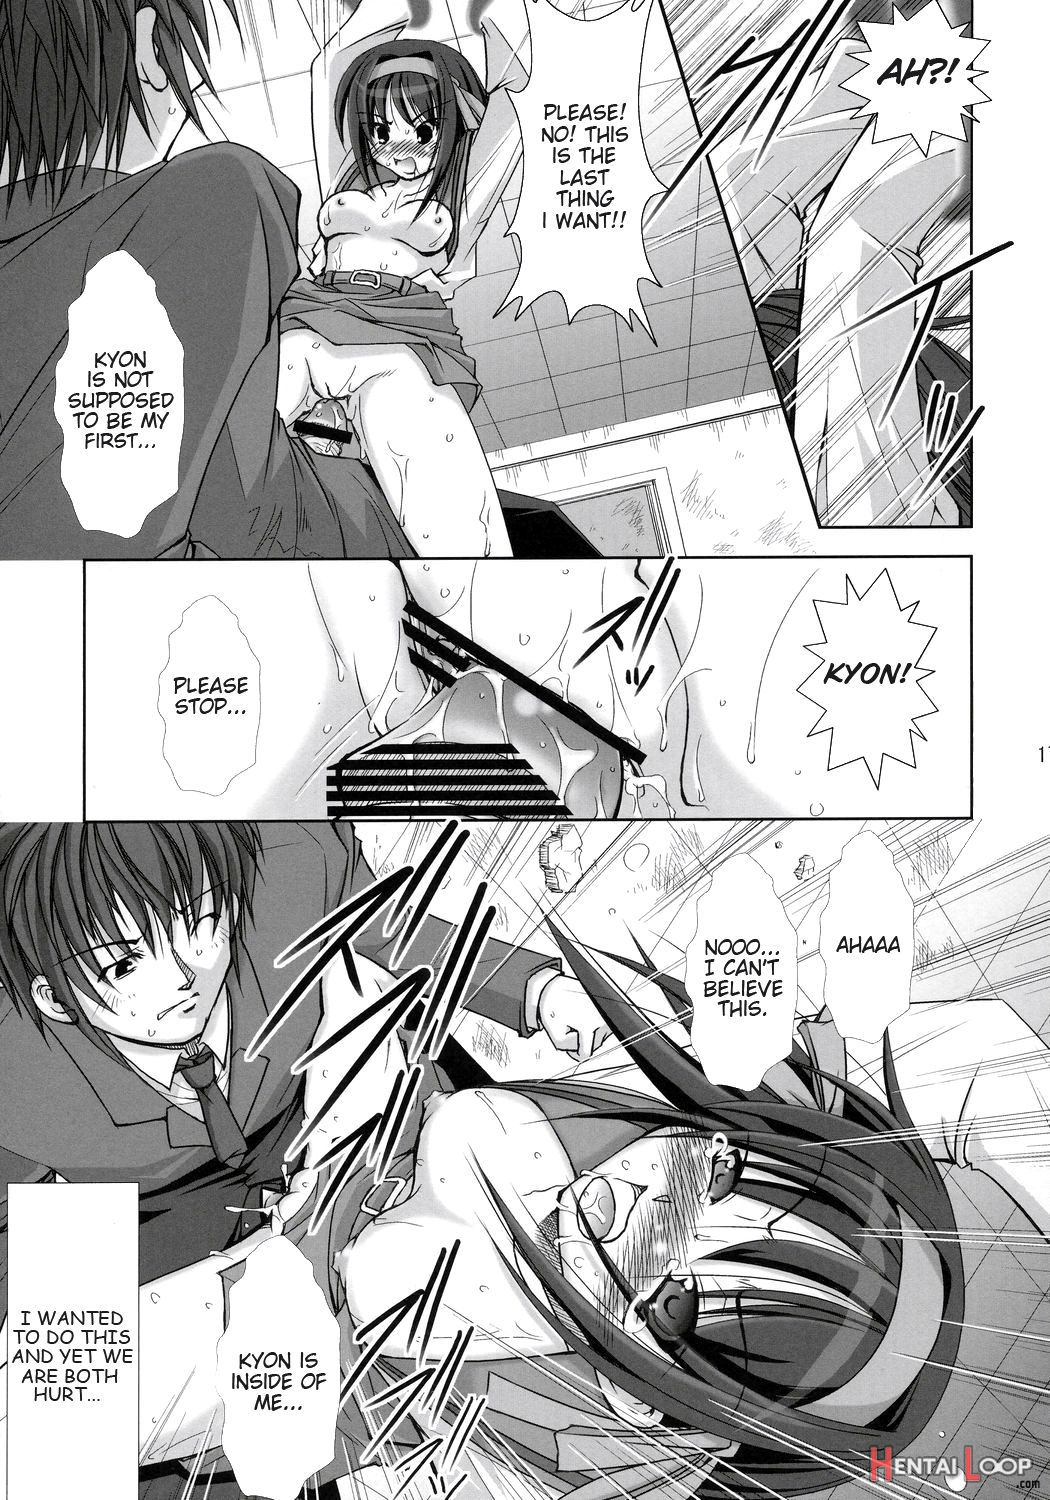 Haruhi Suzumiya's Fetish page 16